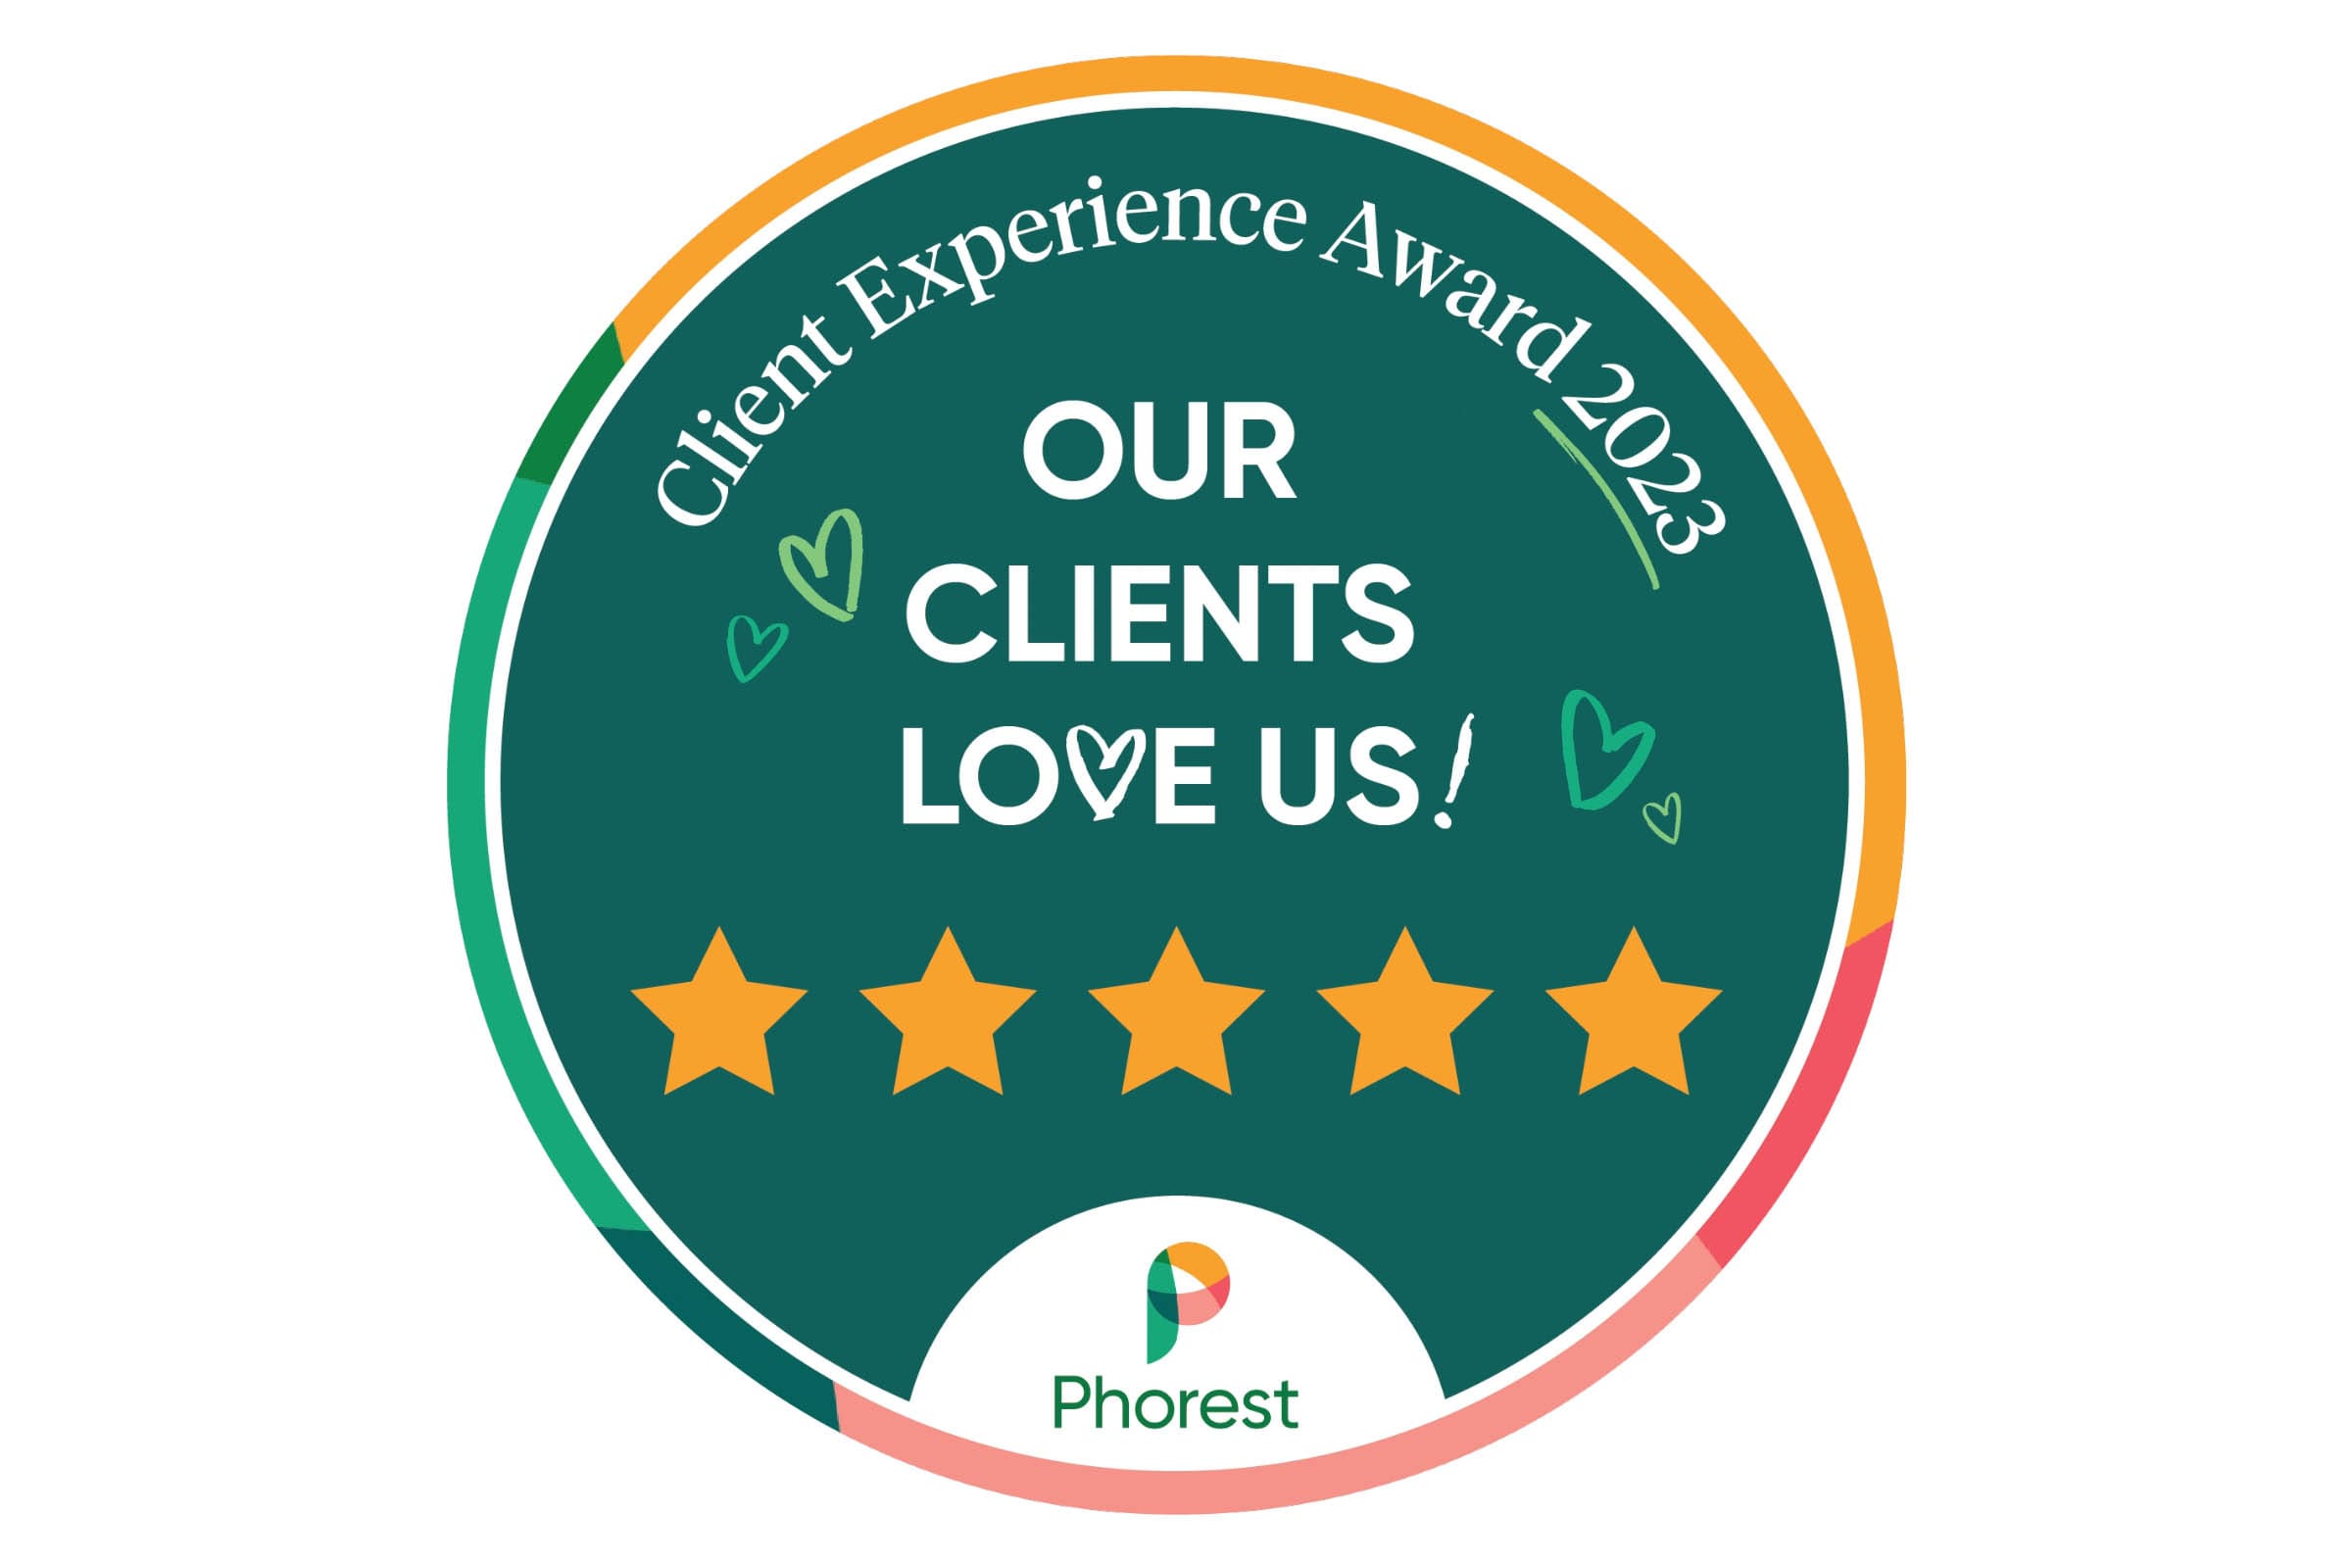 The Phorest Client Experience Award was won again by Sunday Salon